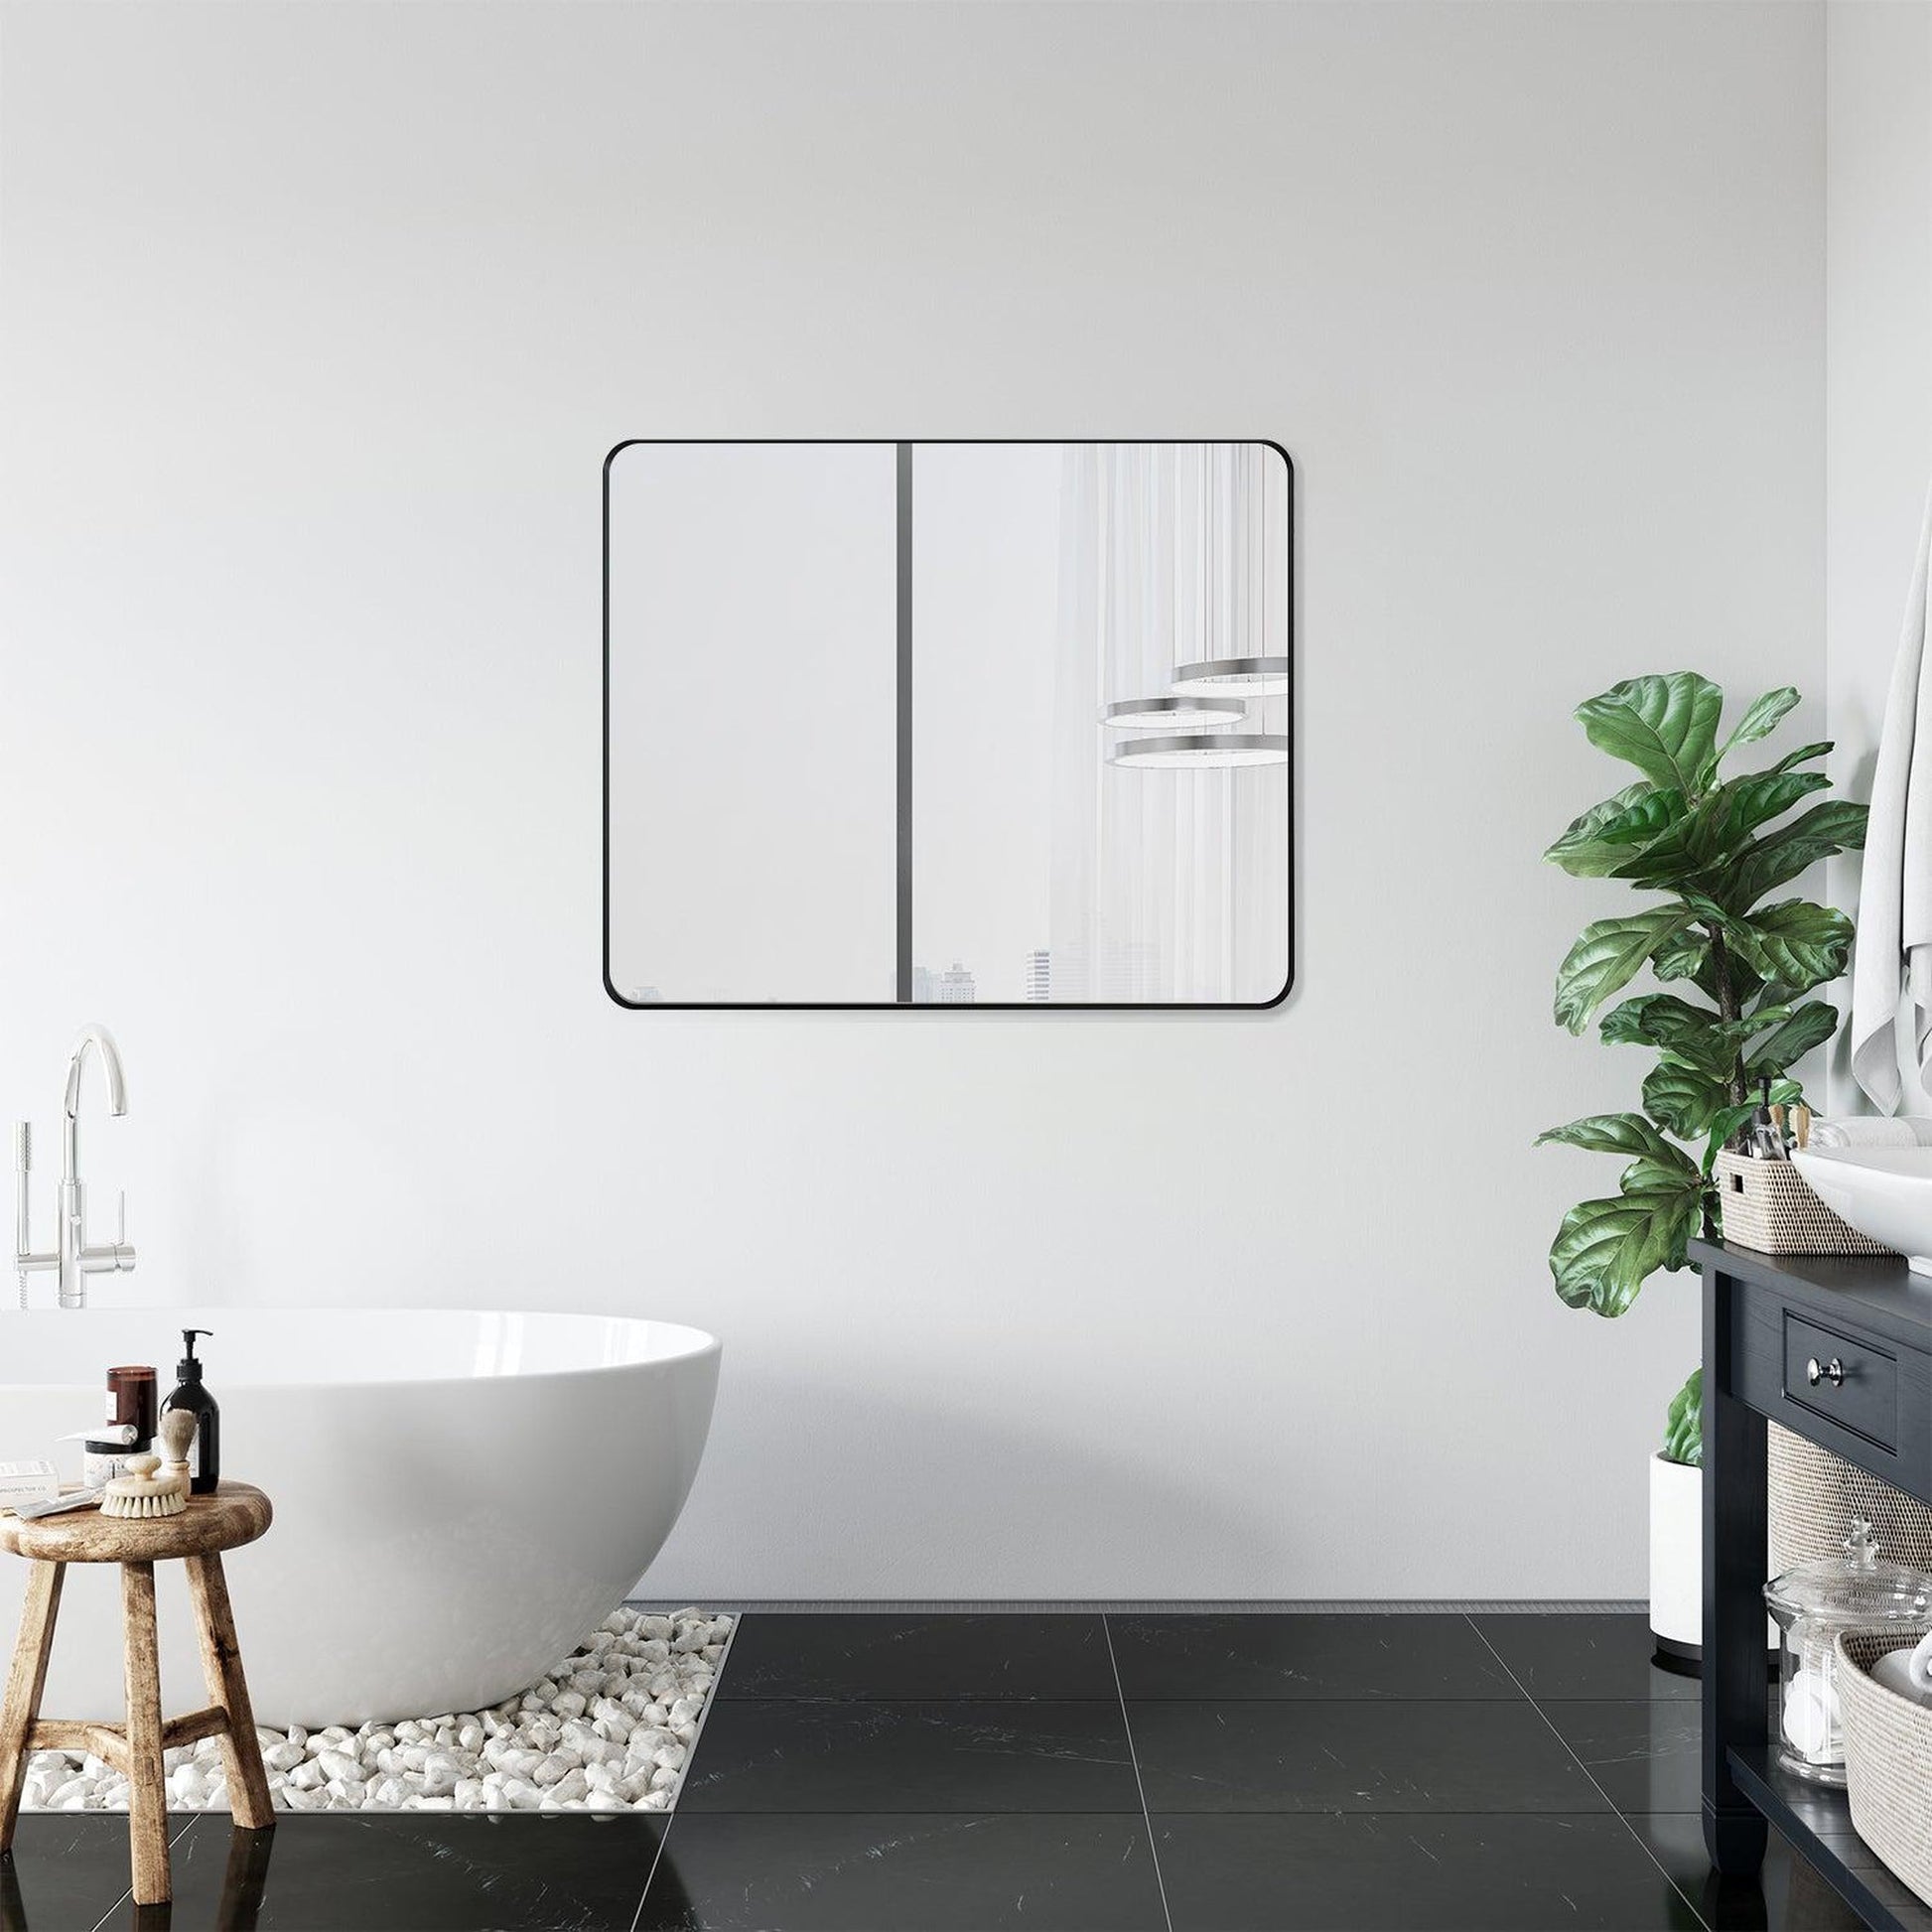 Altair Nettuno 36" x 30" Rectangle Matte Black Aluminum Framed Wall-Mounted Mirror